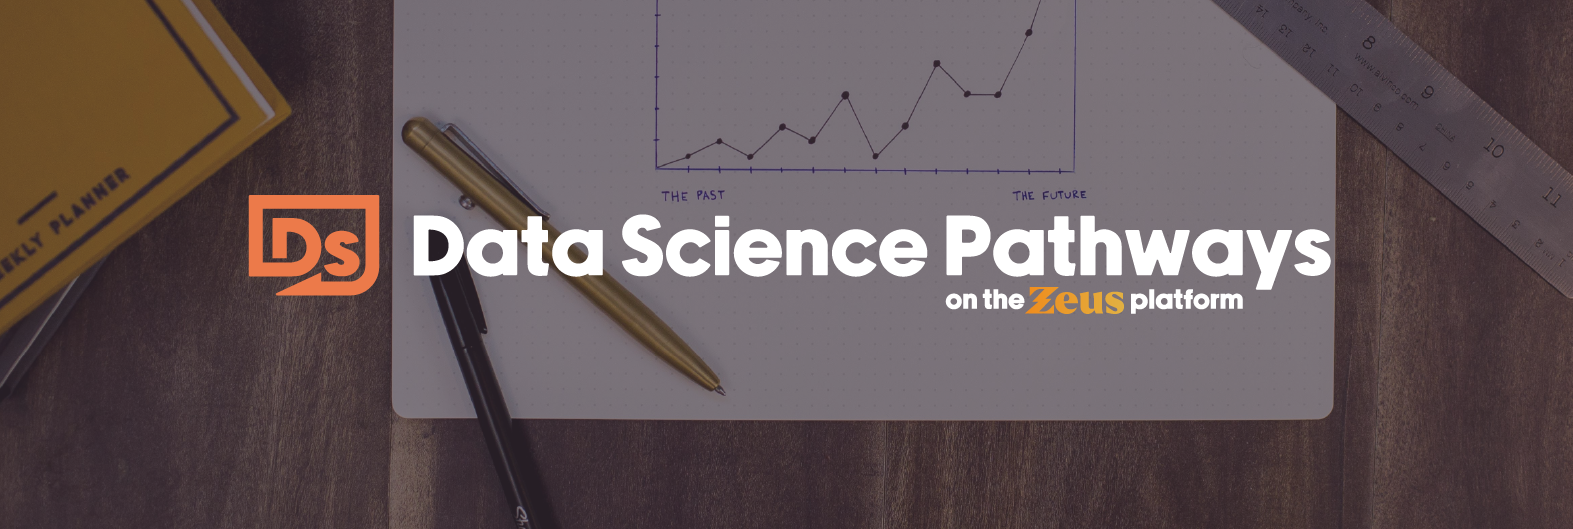 Data Science Pathways